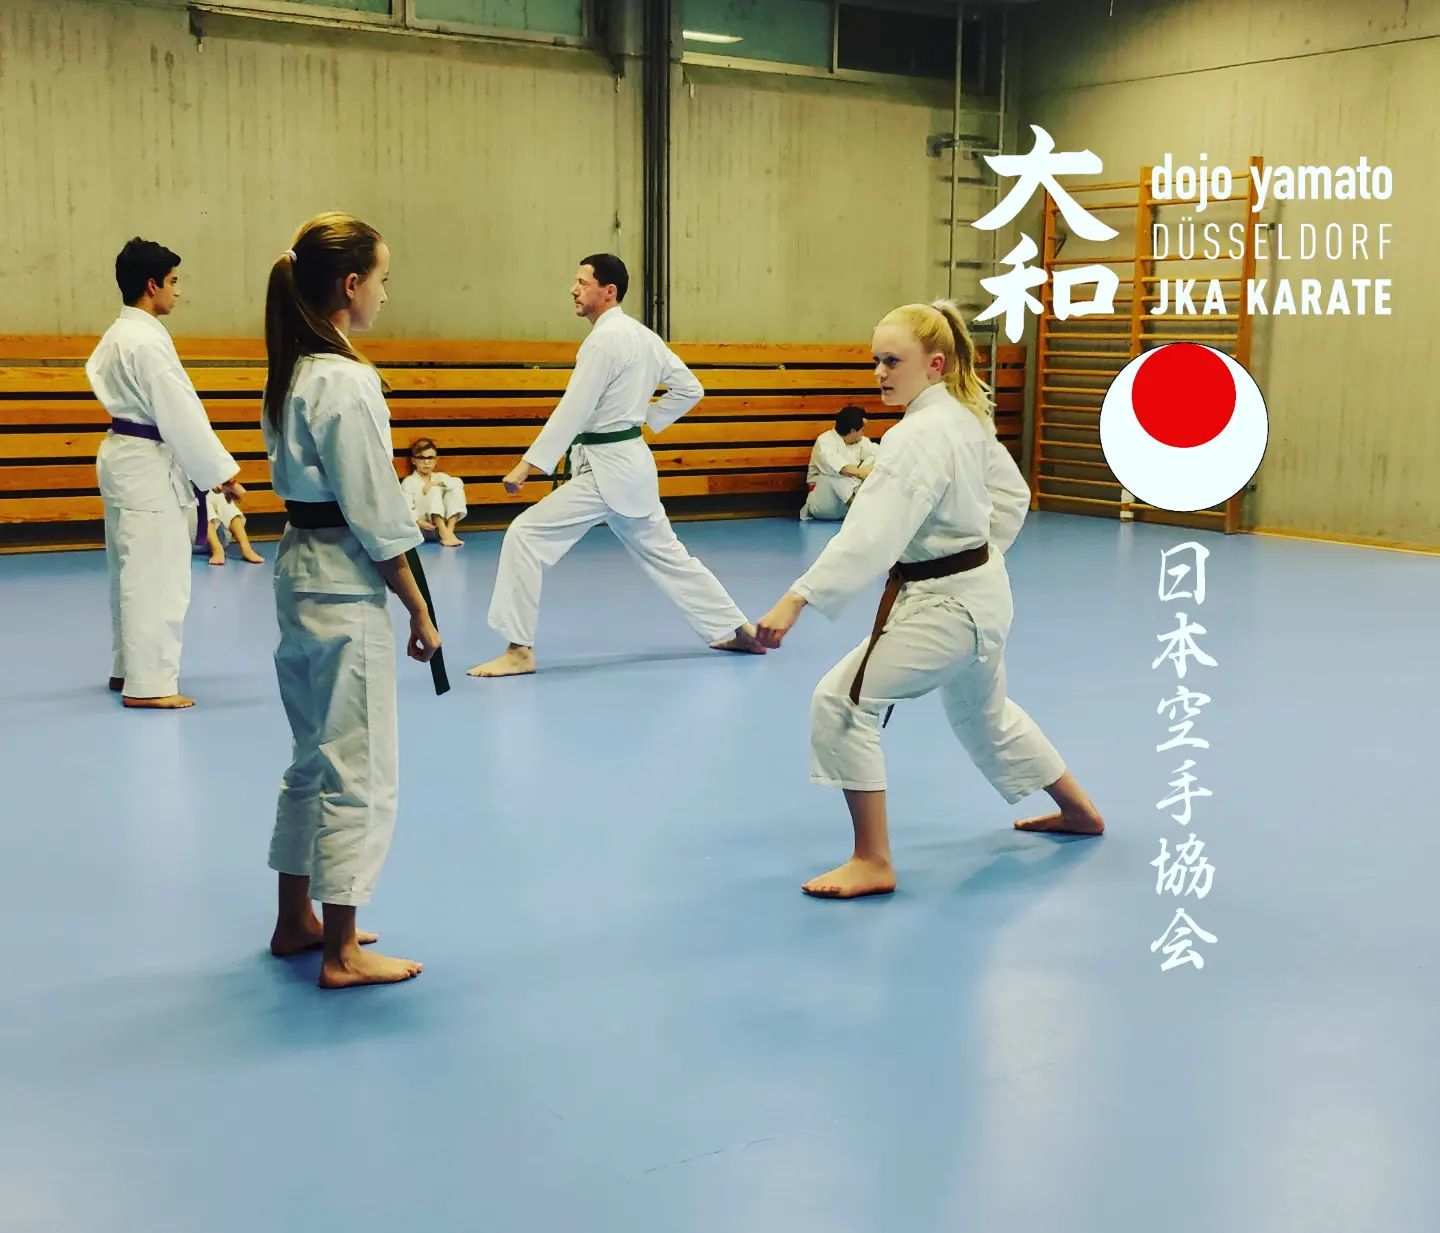 Training im Dojo Yamato Düsseldorf e.V. 🥋
.
.
.
.

.
.
#karate #training #fun #jka #djkb #kihon #kata #kumite #düsseldorf #duesseldorf #japan #sport #sportmotivation #shotokan #traditional #nrw #yamatoduesseldorf #fitness #fitnessmotivation #jkaKarate #jkakaratedo #neuss #ratingen #hilden #leverkusen #kaarst #selbstbstbewusstsein #selbstvertrauen